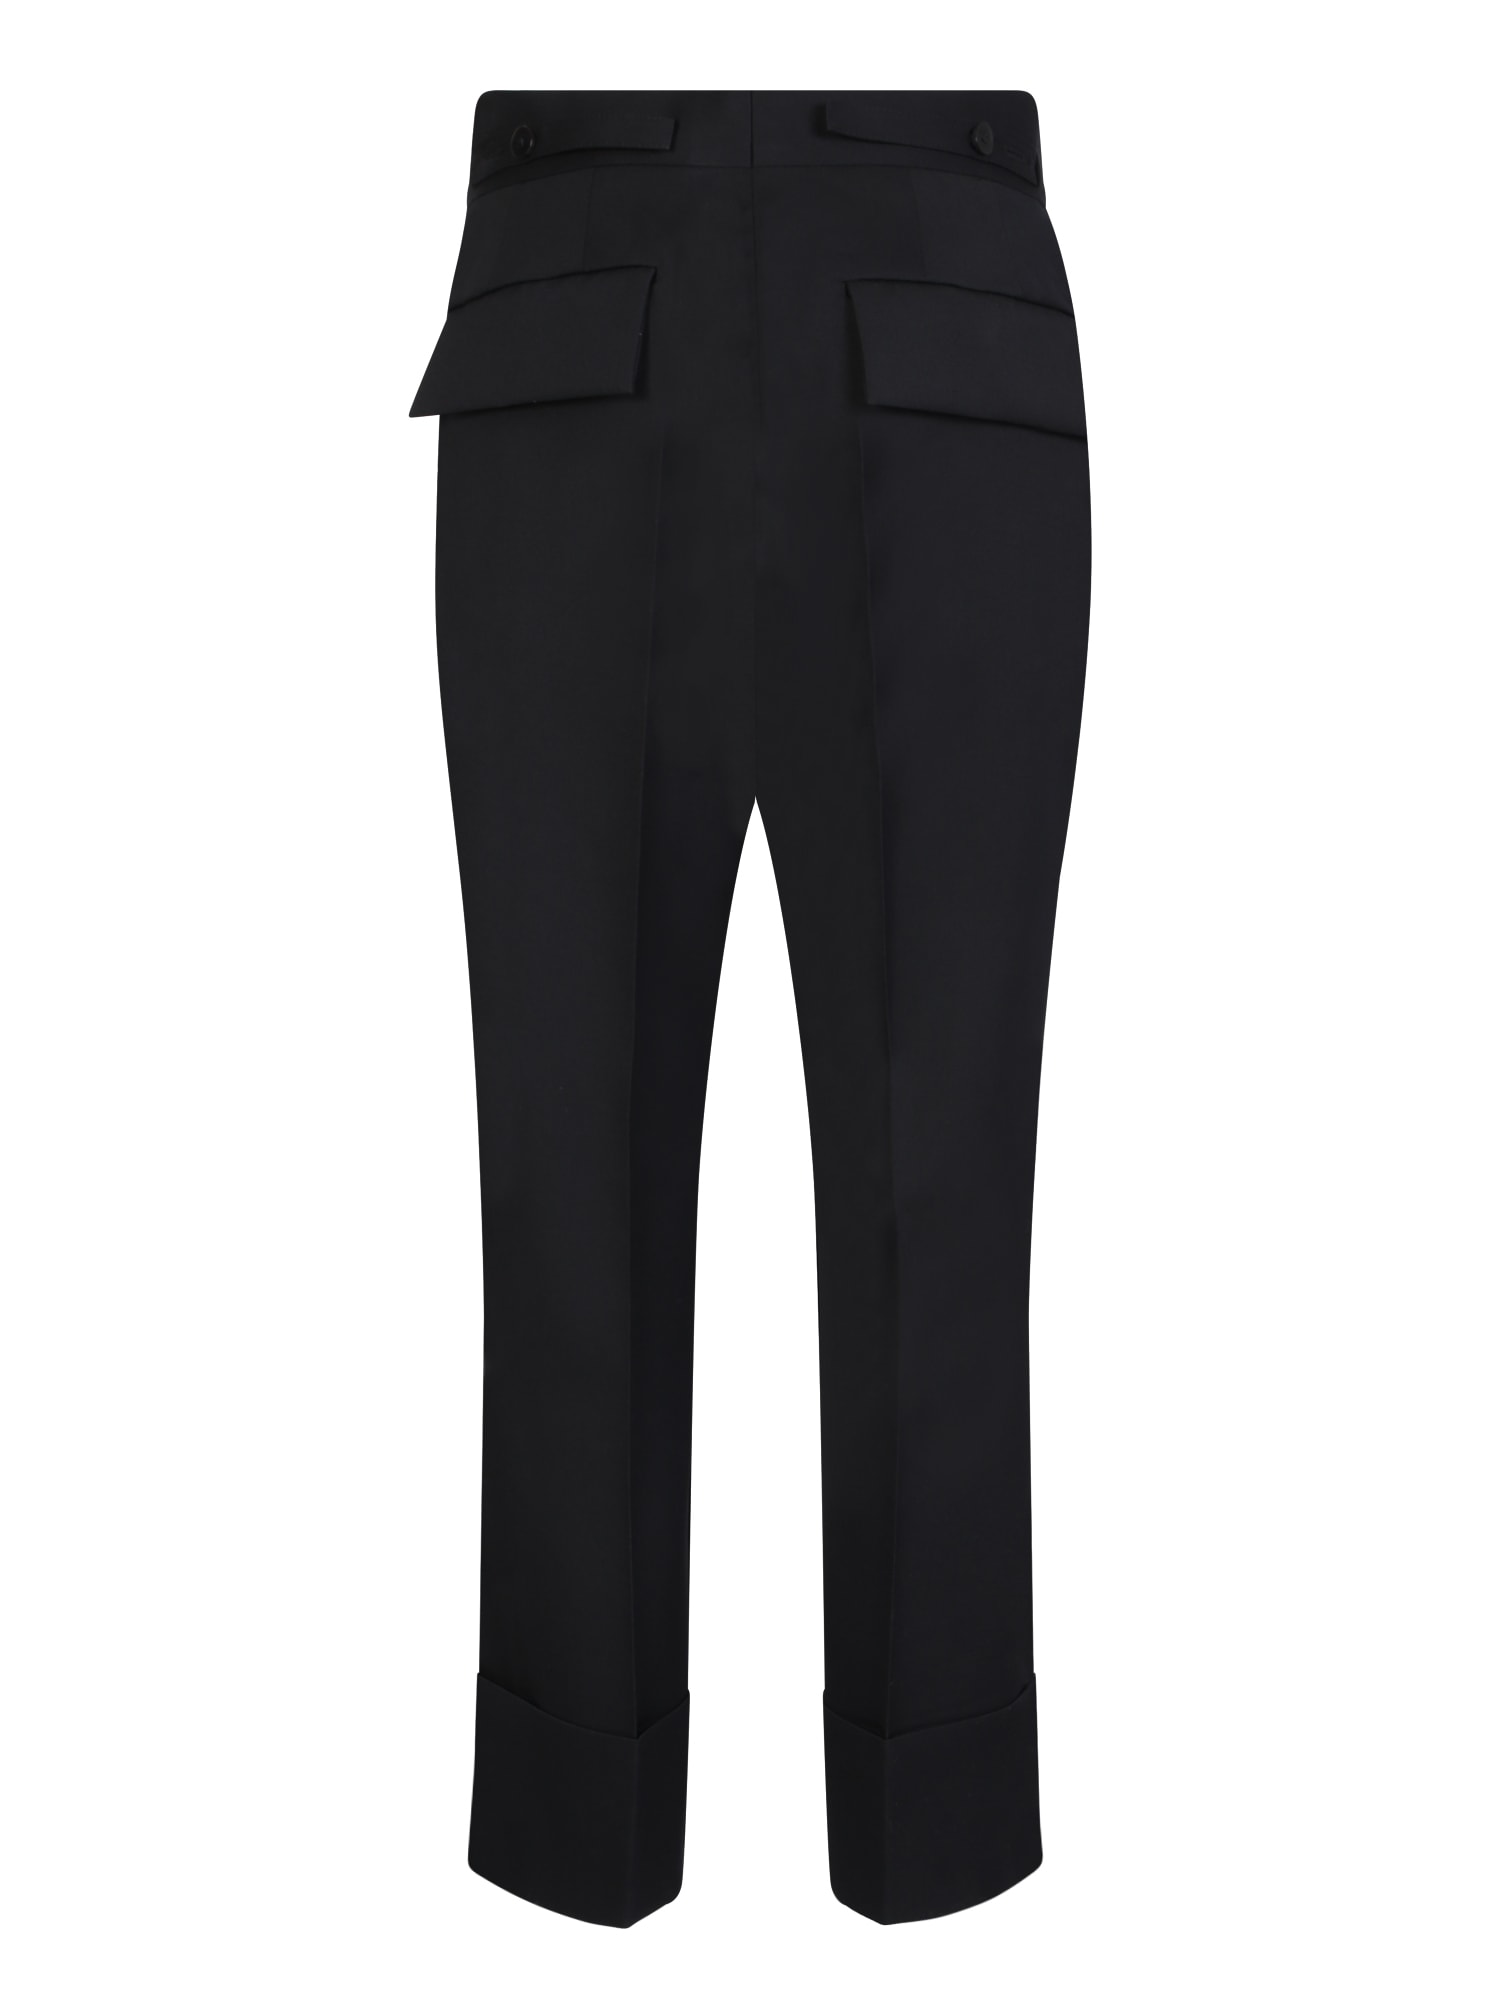 Shop Sapio Black Tuxedo Trousers